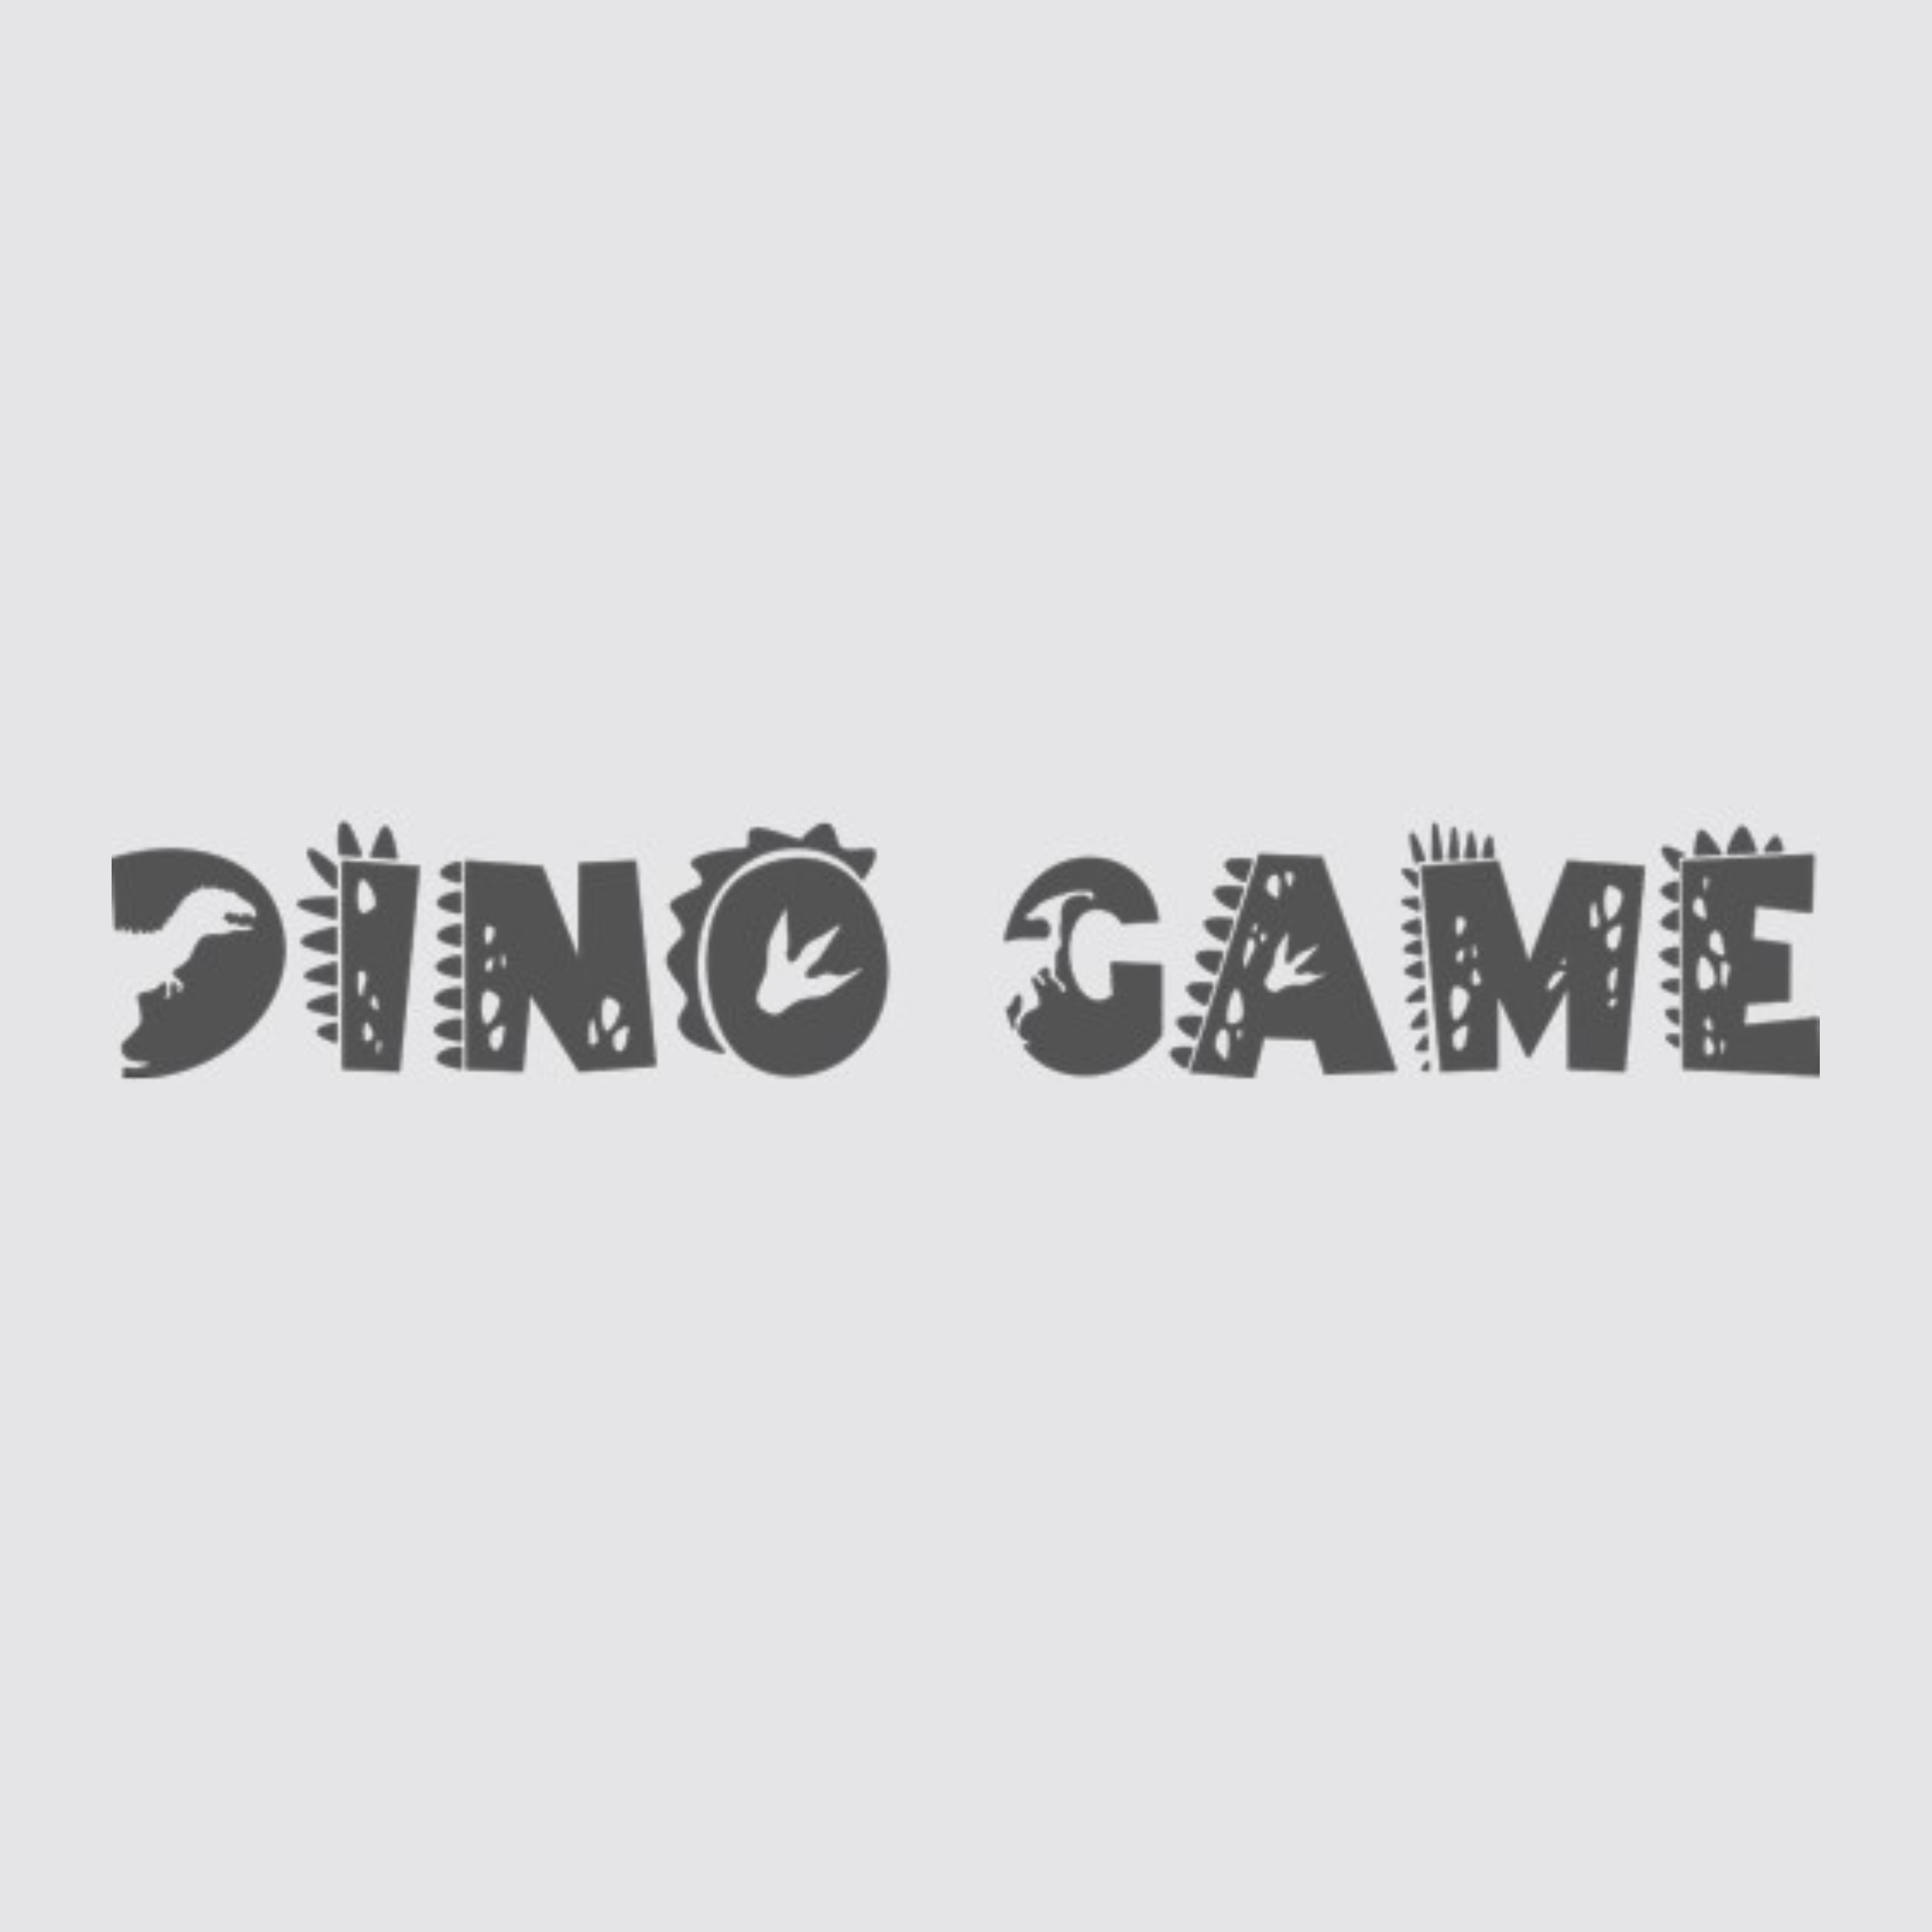 Google's Offline Dinosaur Game - Dino Trex Super Tap to Play Pin